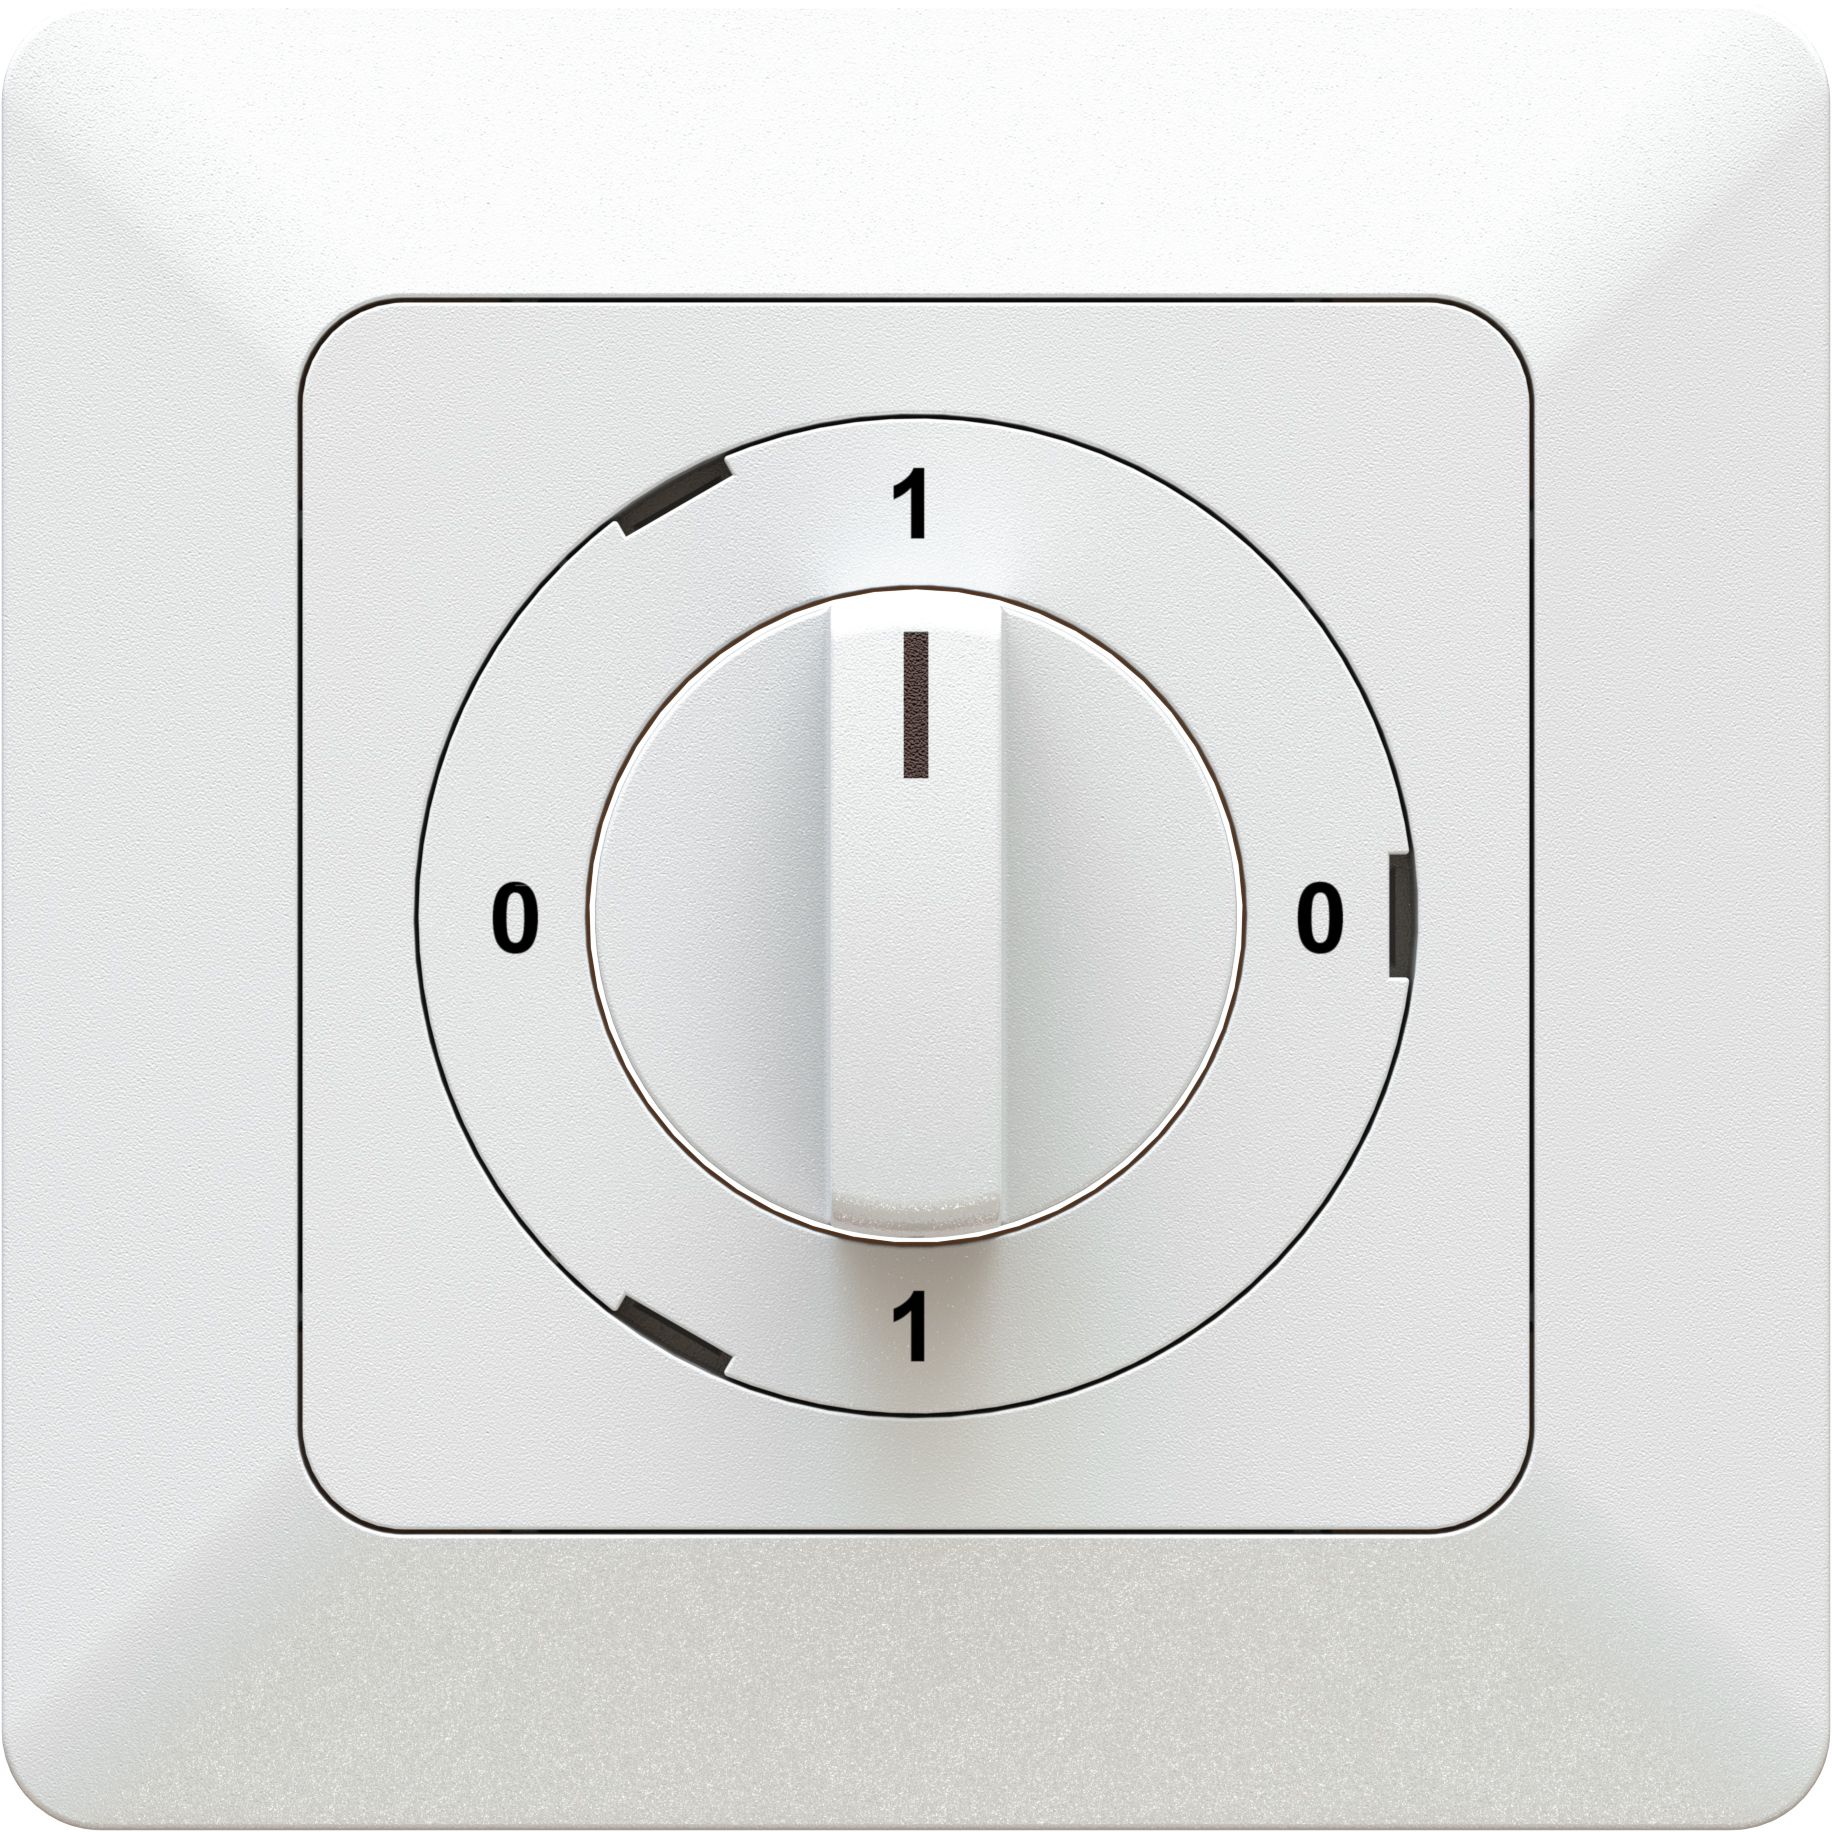 interrupteur rotatif schéma 0/3L 0-1-0-1 ENC priamos blanc